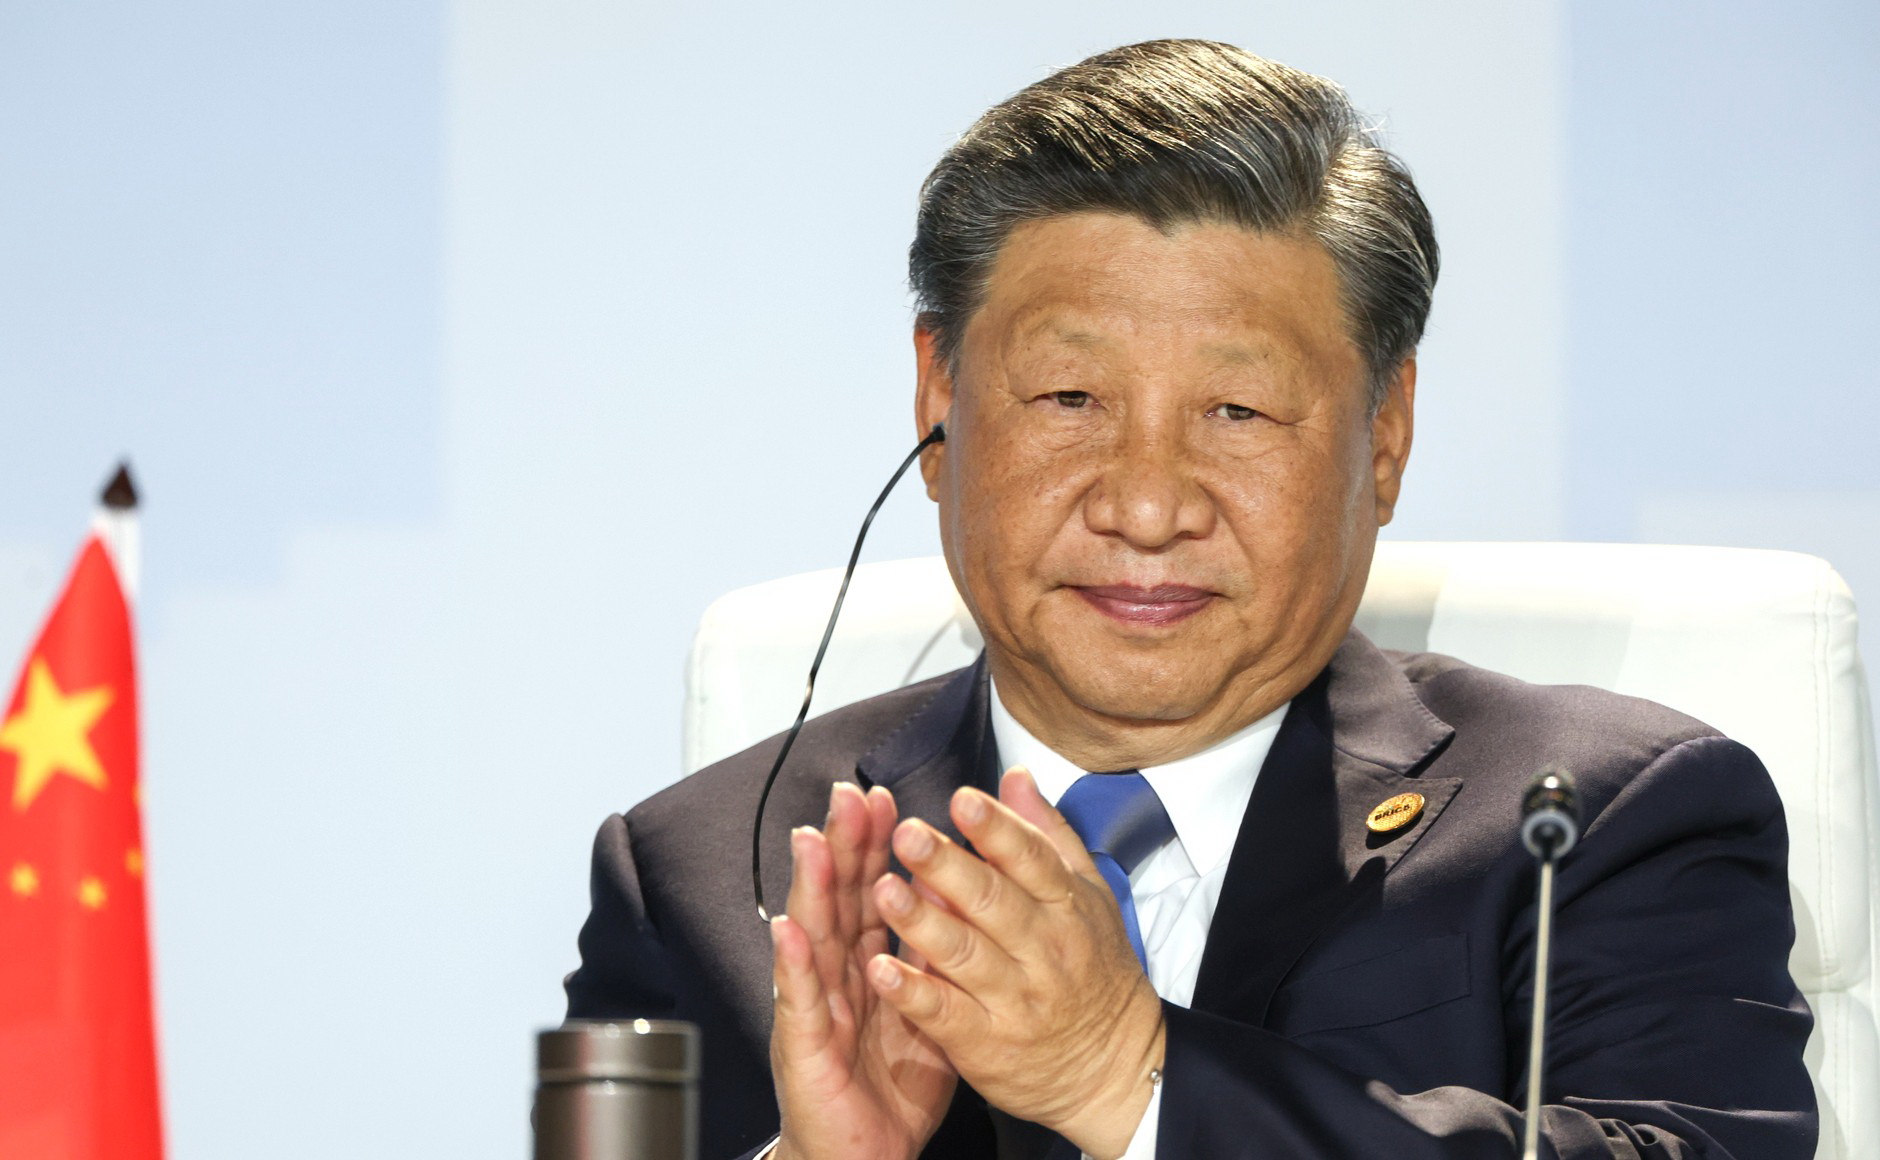 Populismi, l’arma di Xi. Così la Cina punta agli anelli deboli